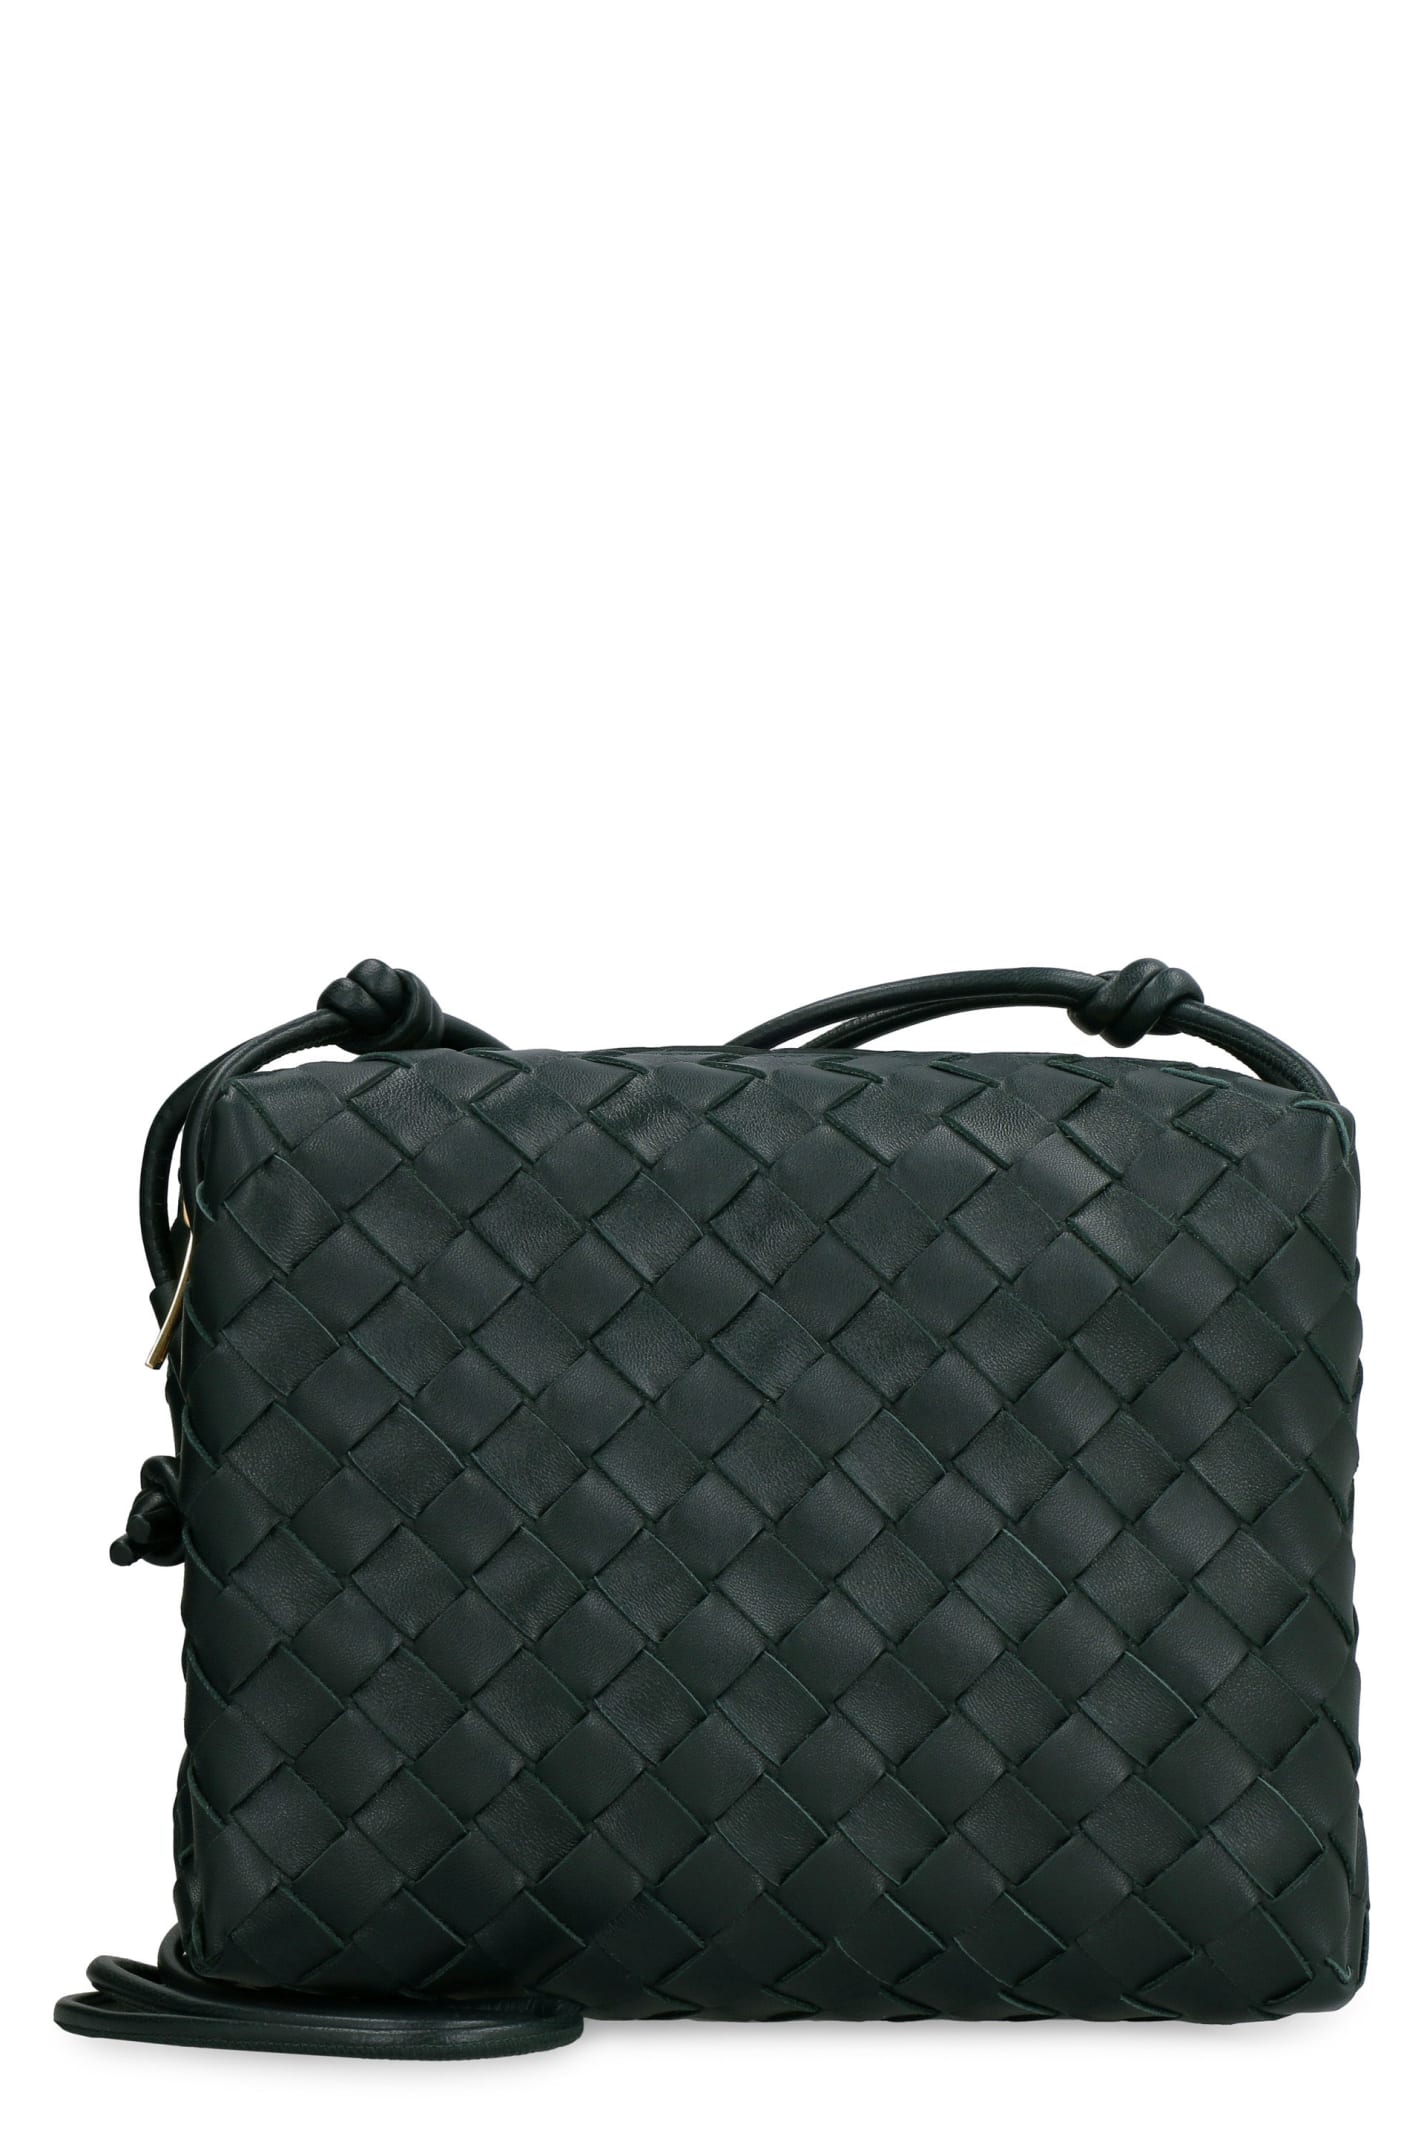 Bottega Veneta Loop Leather Crossbody Bag